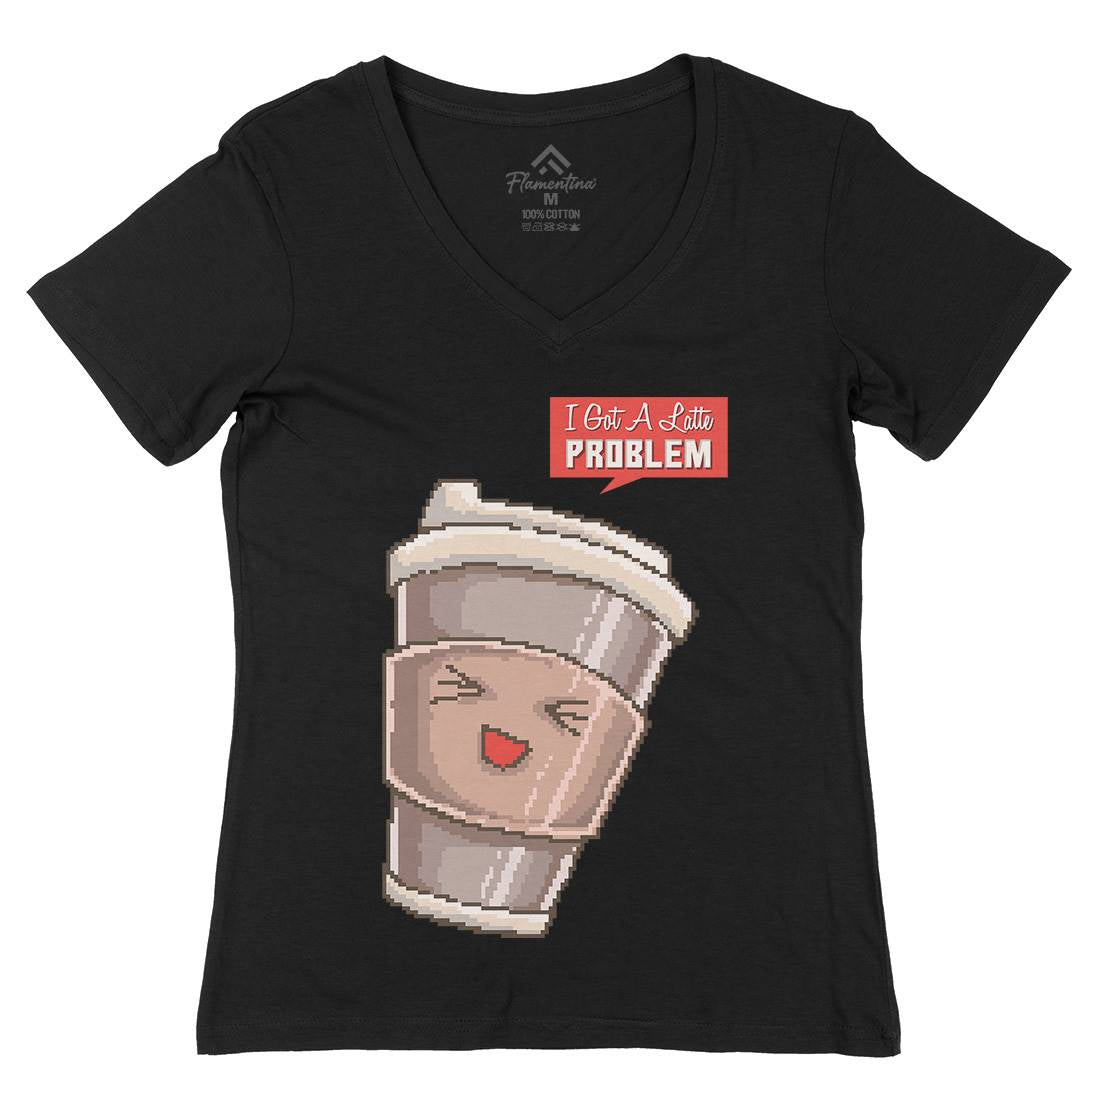 I Got A Latte Problem Womens Organic V-Neck T-Shirt Drinks B914